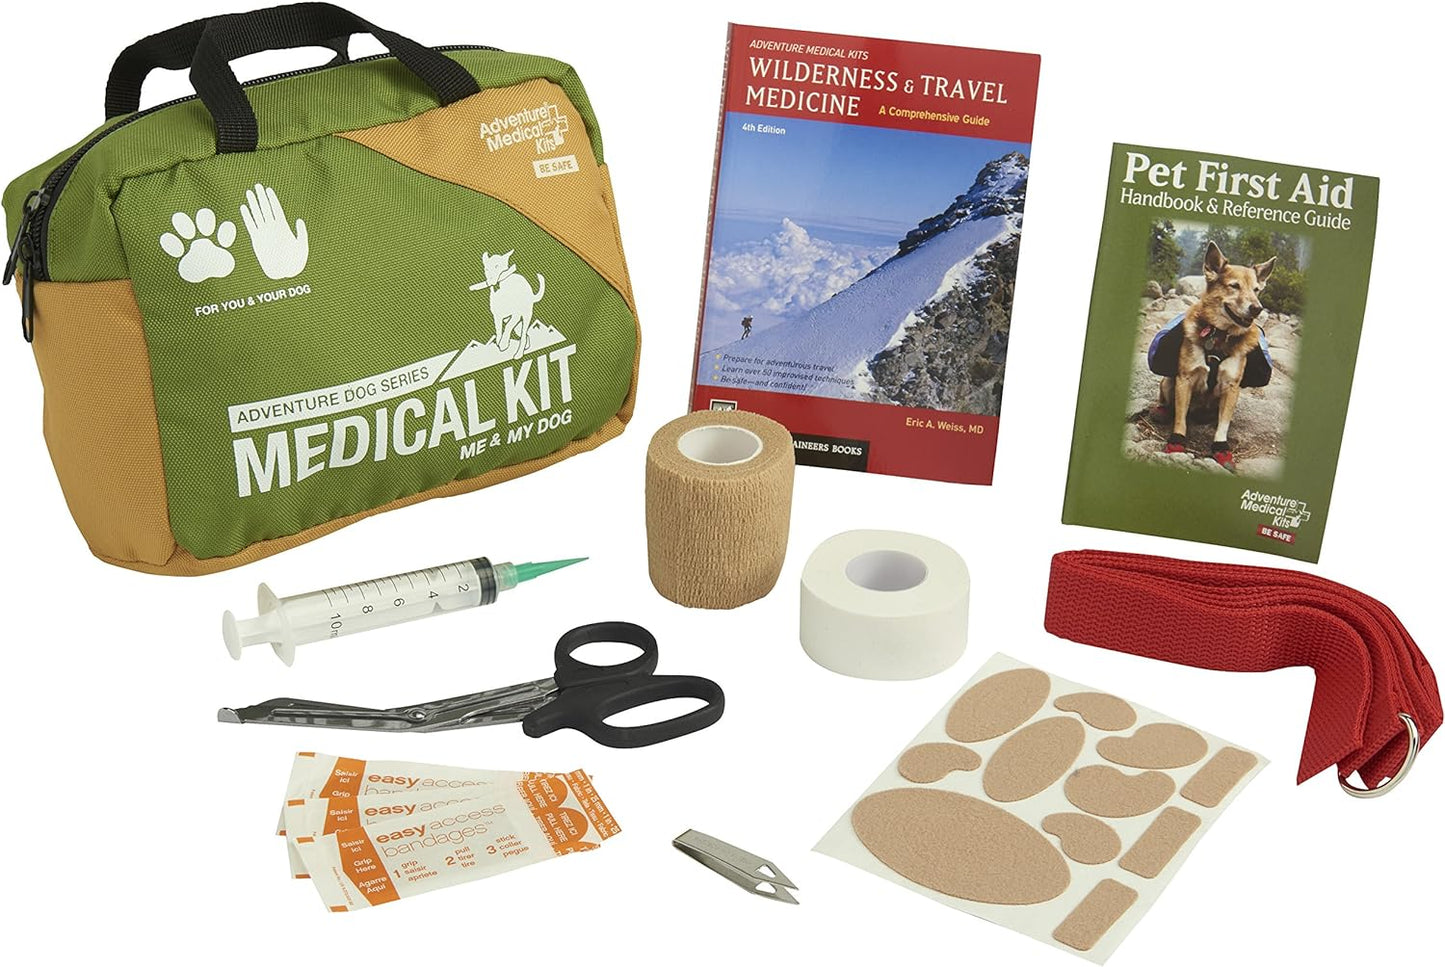 Adventure Dog Series Me & My Dog First Aid Kit